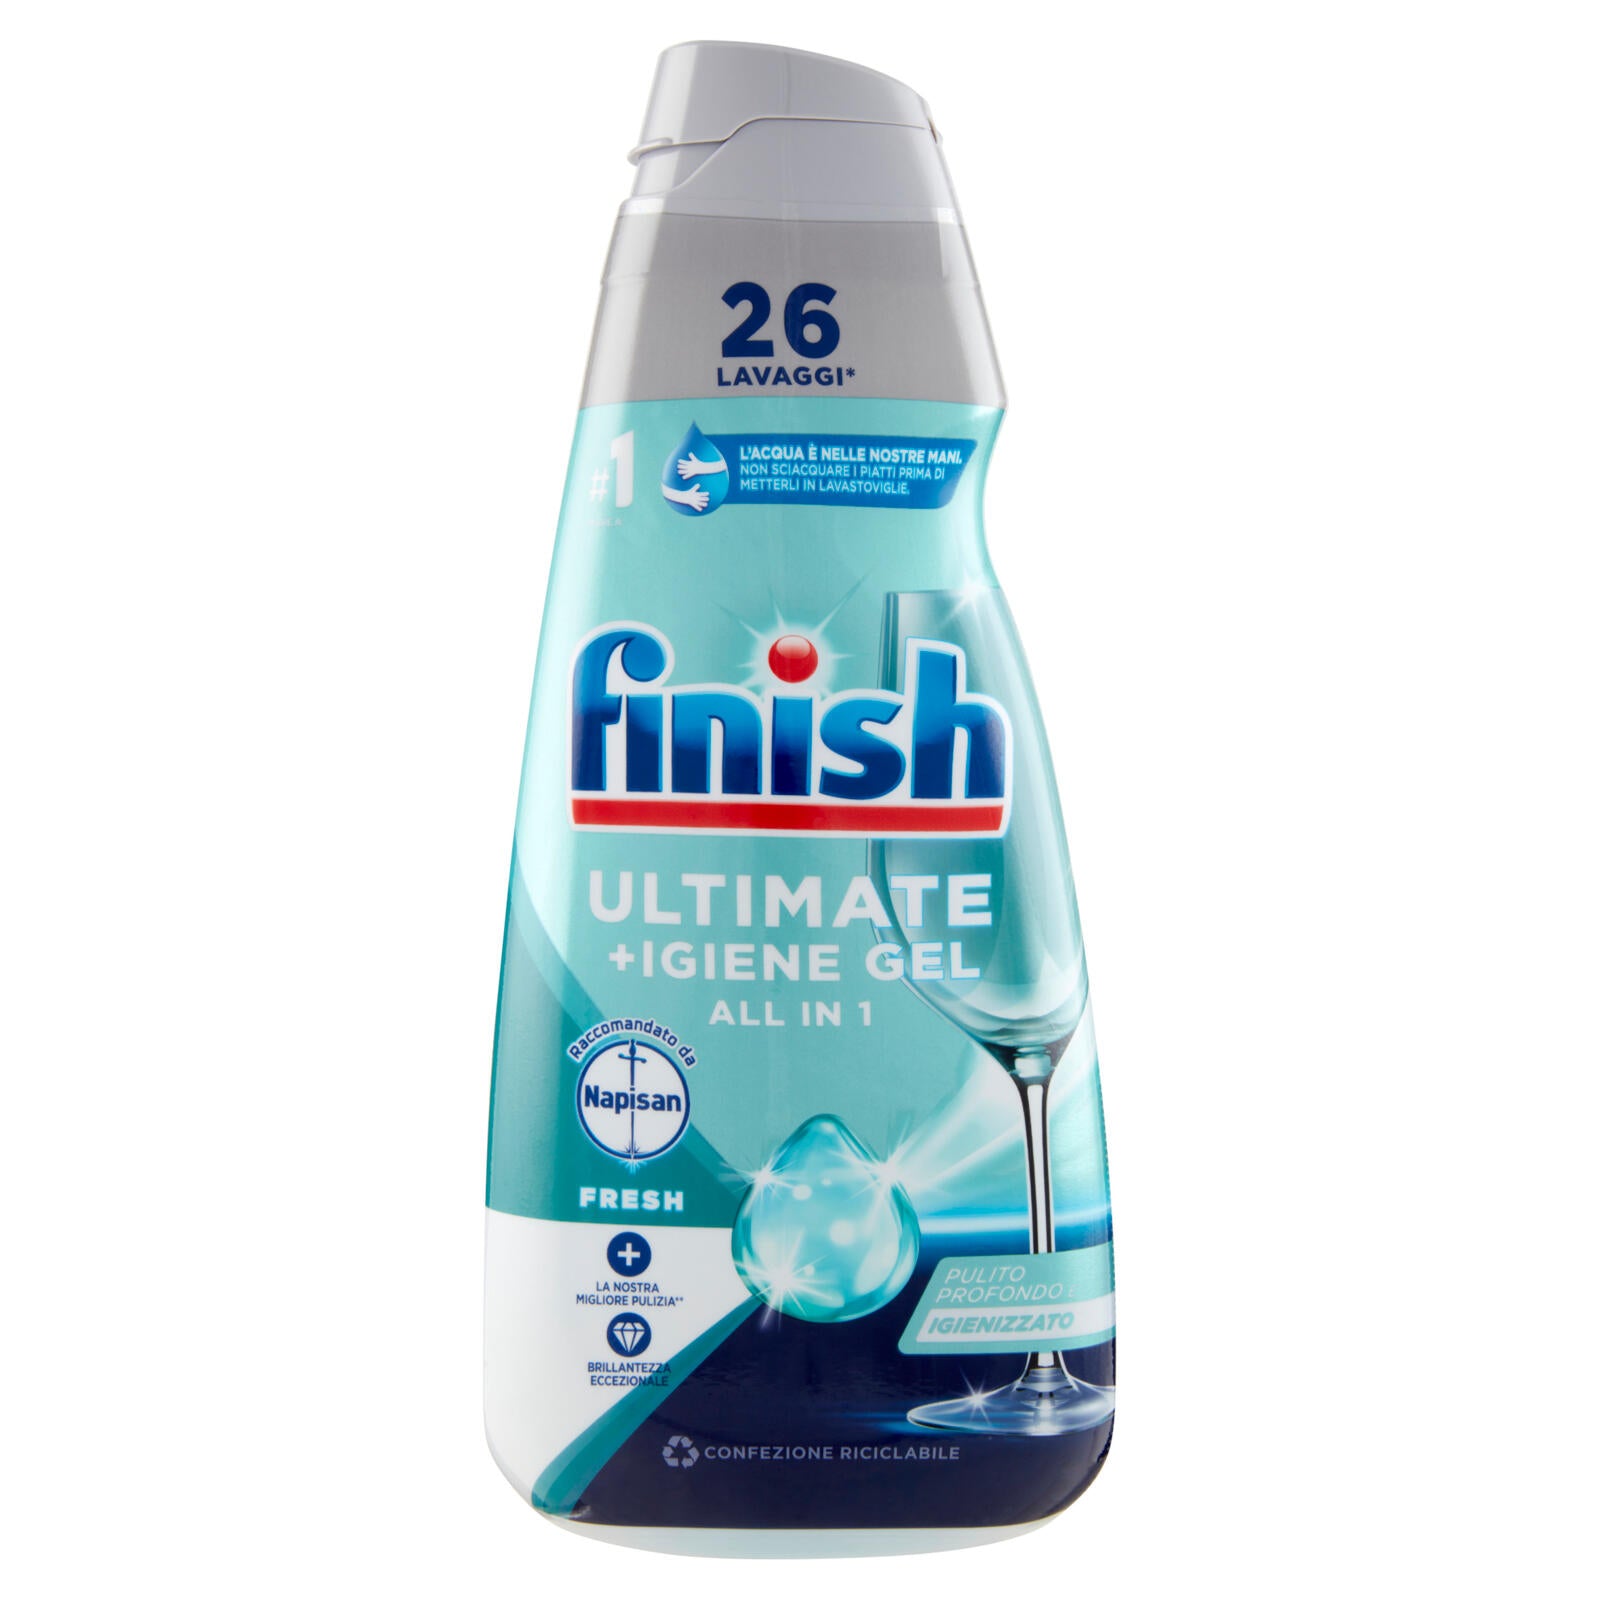 Finish Ultimate + Igiene Gel Napisan Regular liquido lavastoviglie 26 lavaggi 560 ml